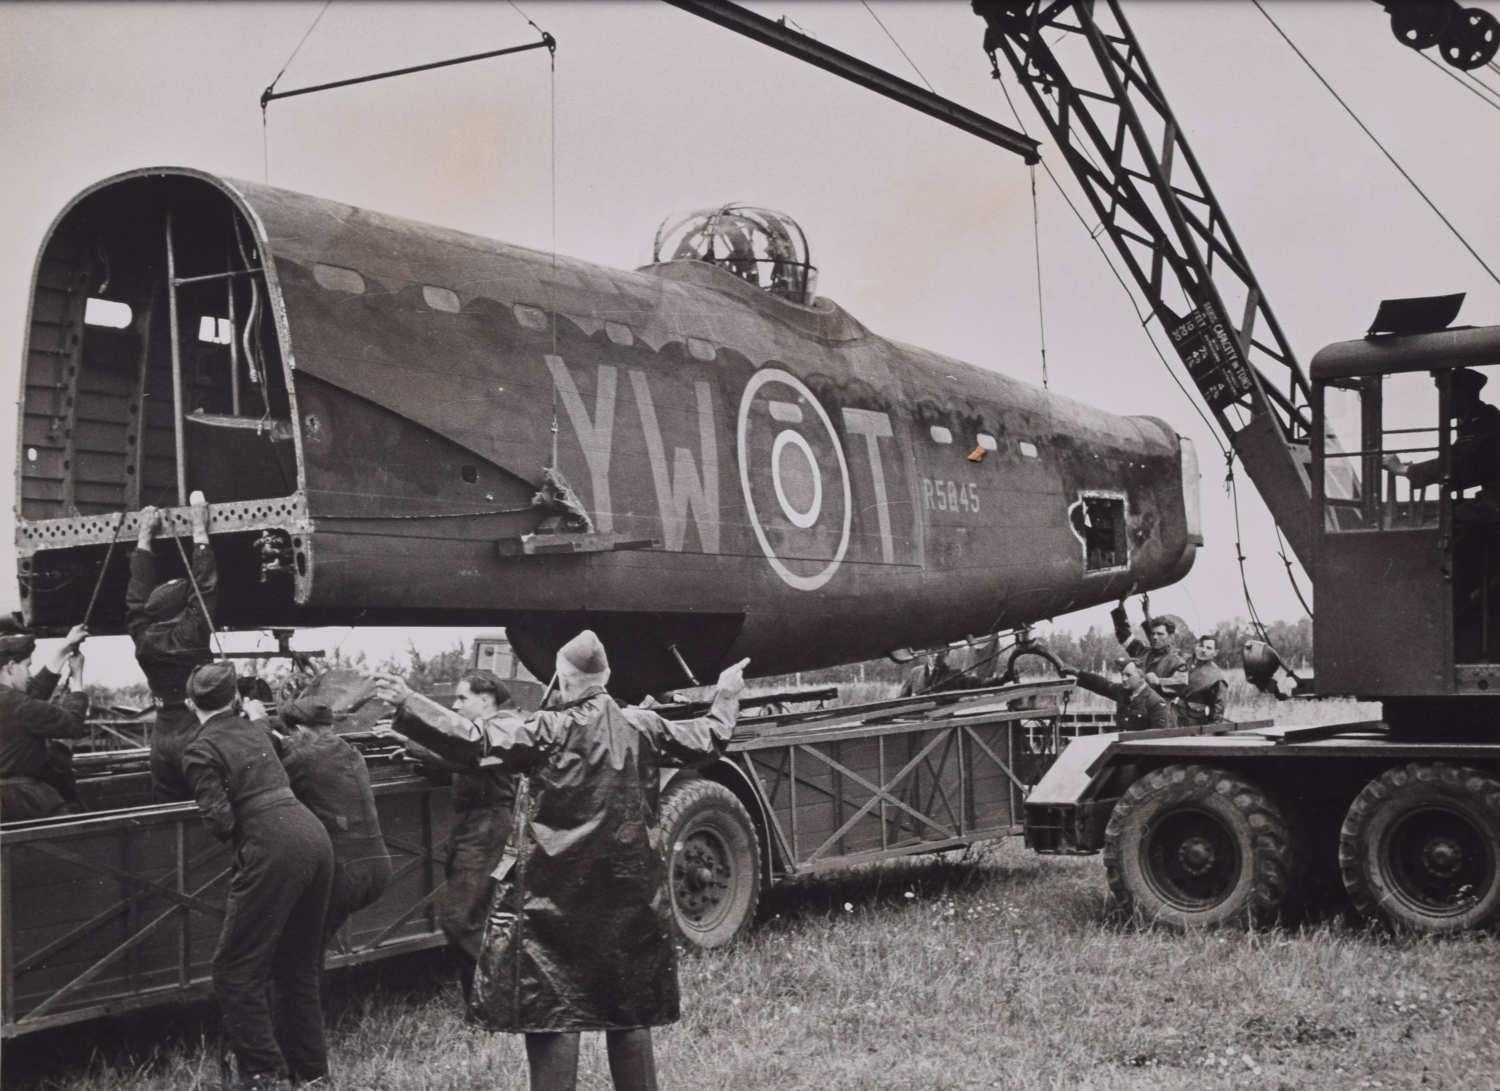 Avro Lancaster R5845 YW-T after crash original 1943 silver gelatin photograph